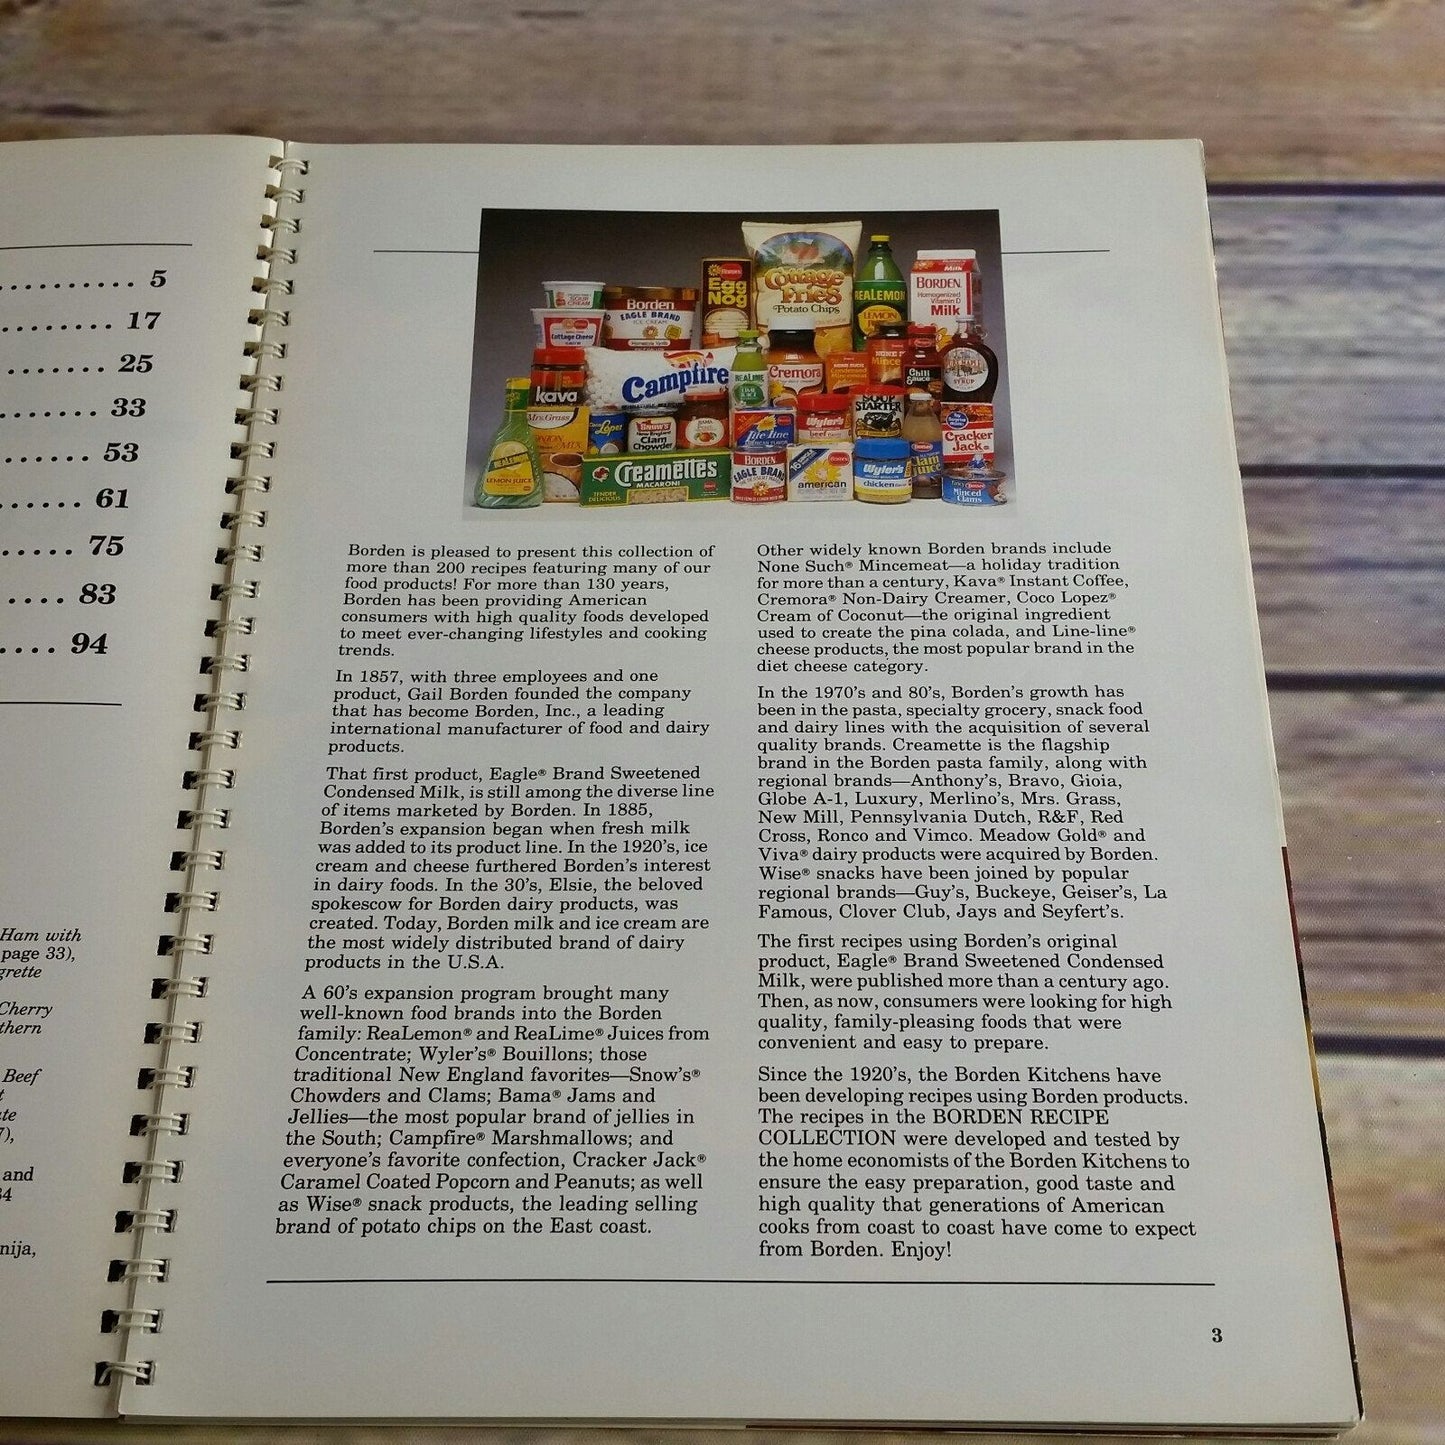 Vintage Cookbook Borden Recipe Collection Recipes Promo Book 1987 Spiral Bound Paperback Book